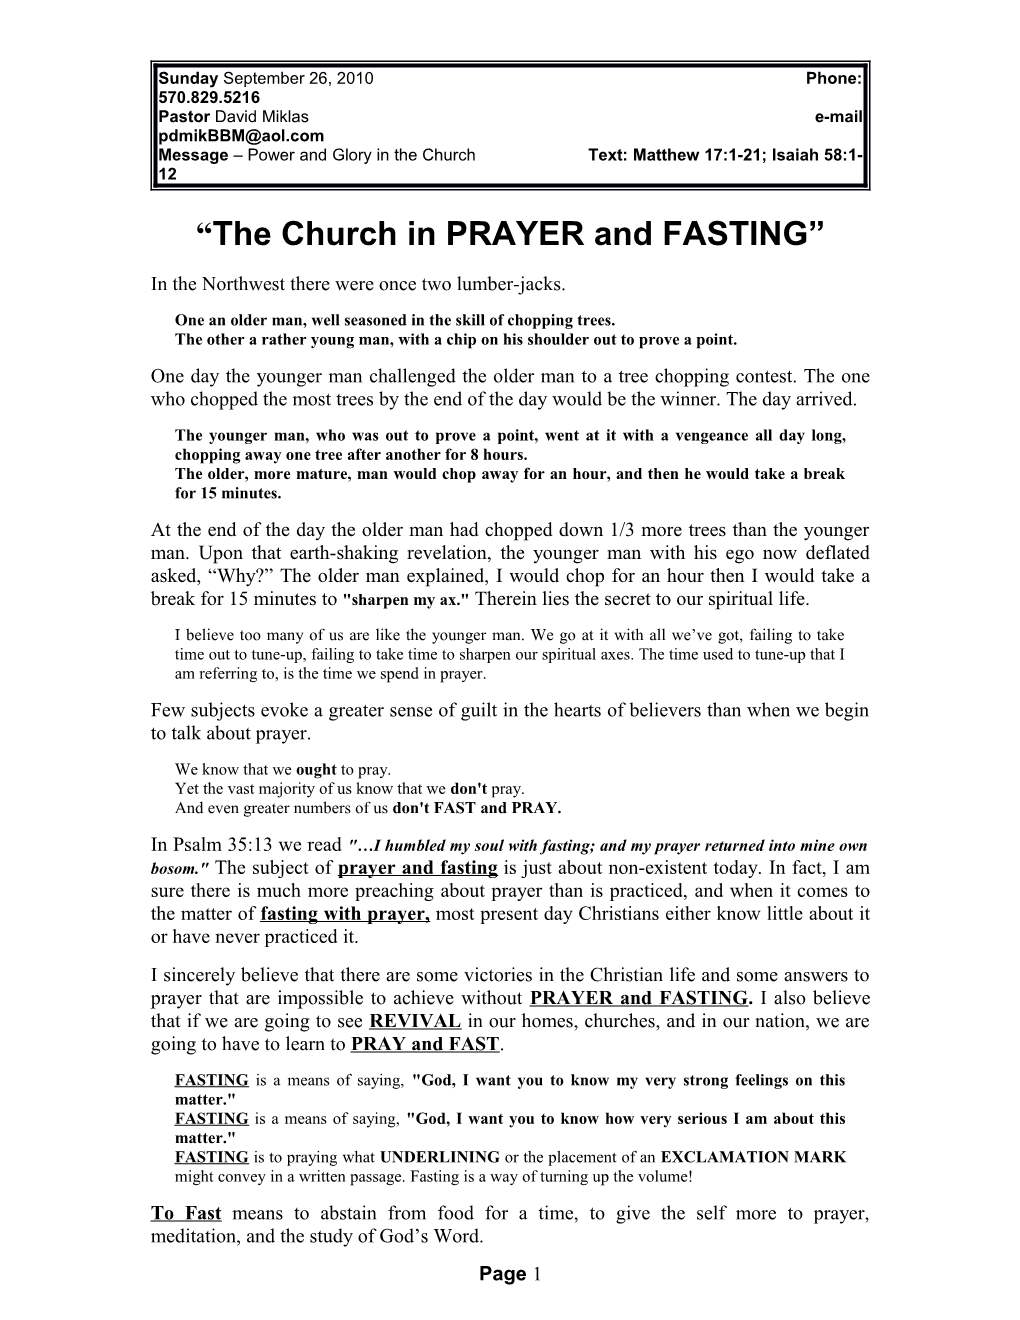 The Church in PRAYER & FASTING